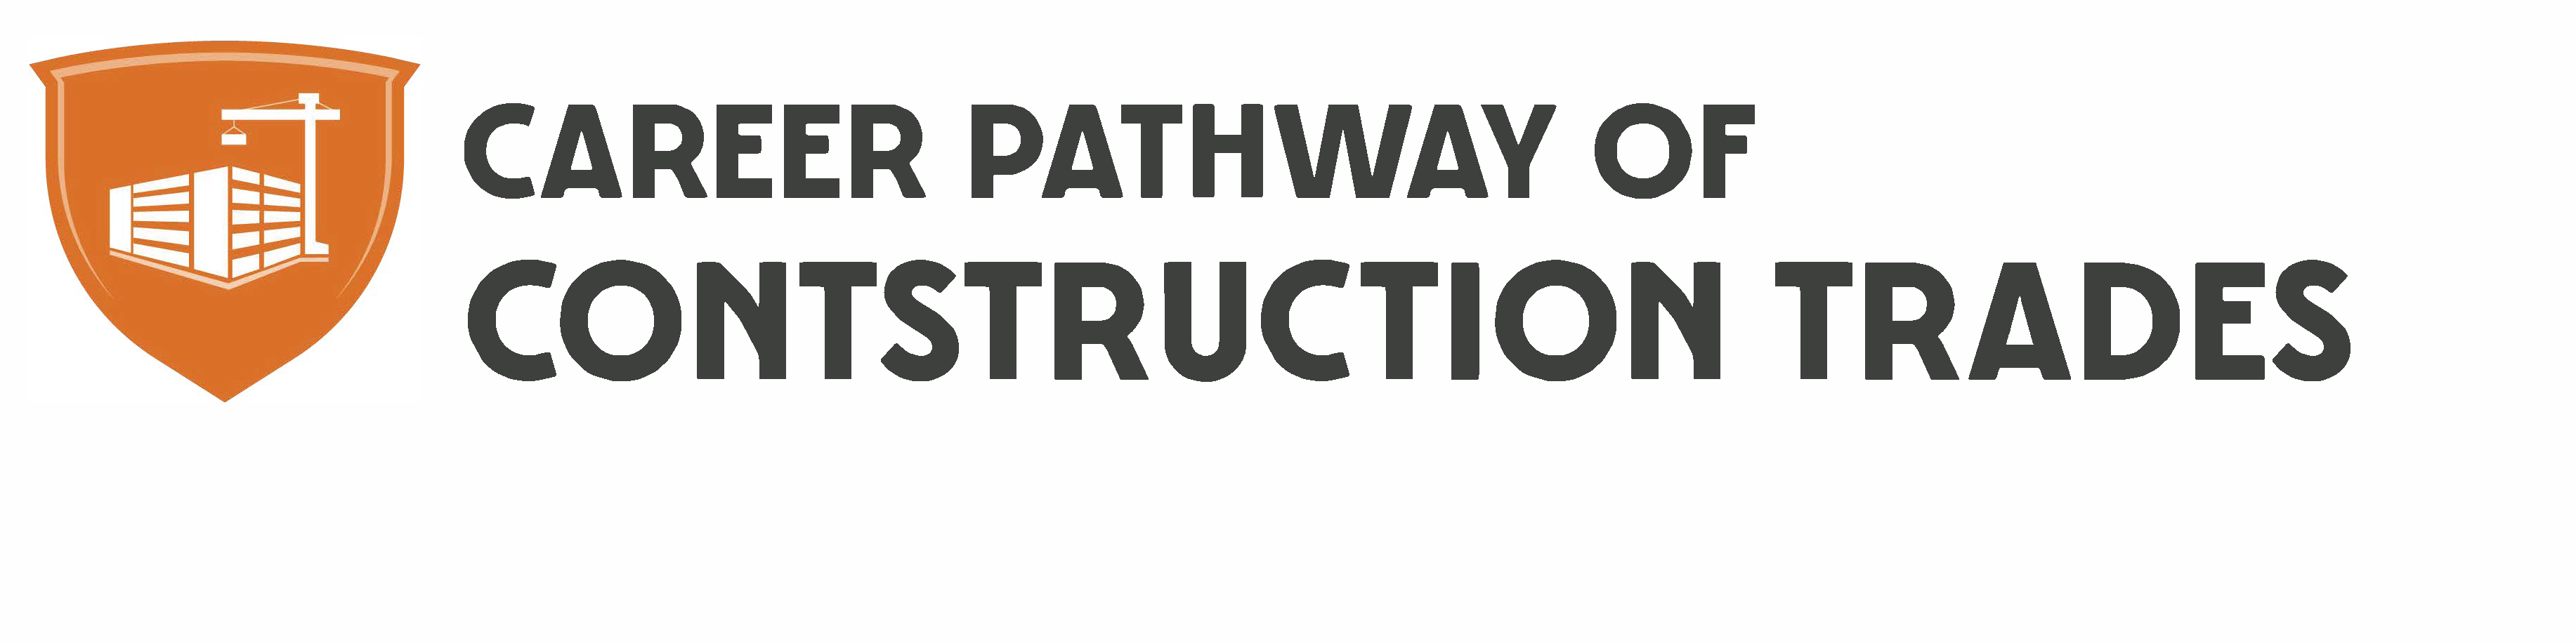 Pathway Construction Trades